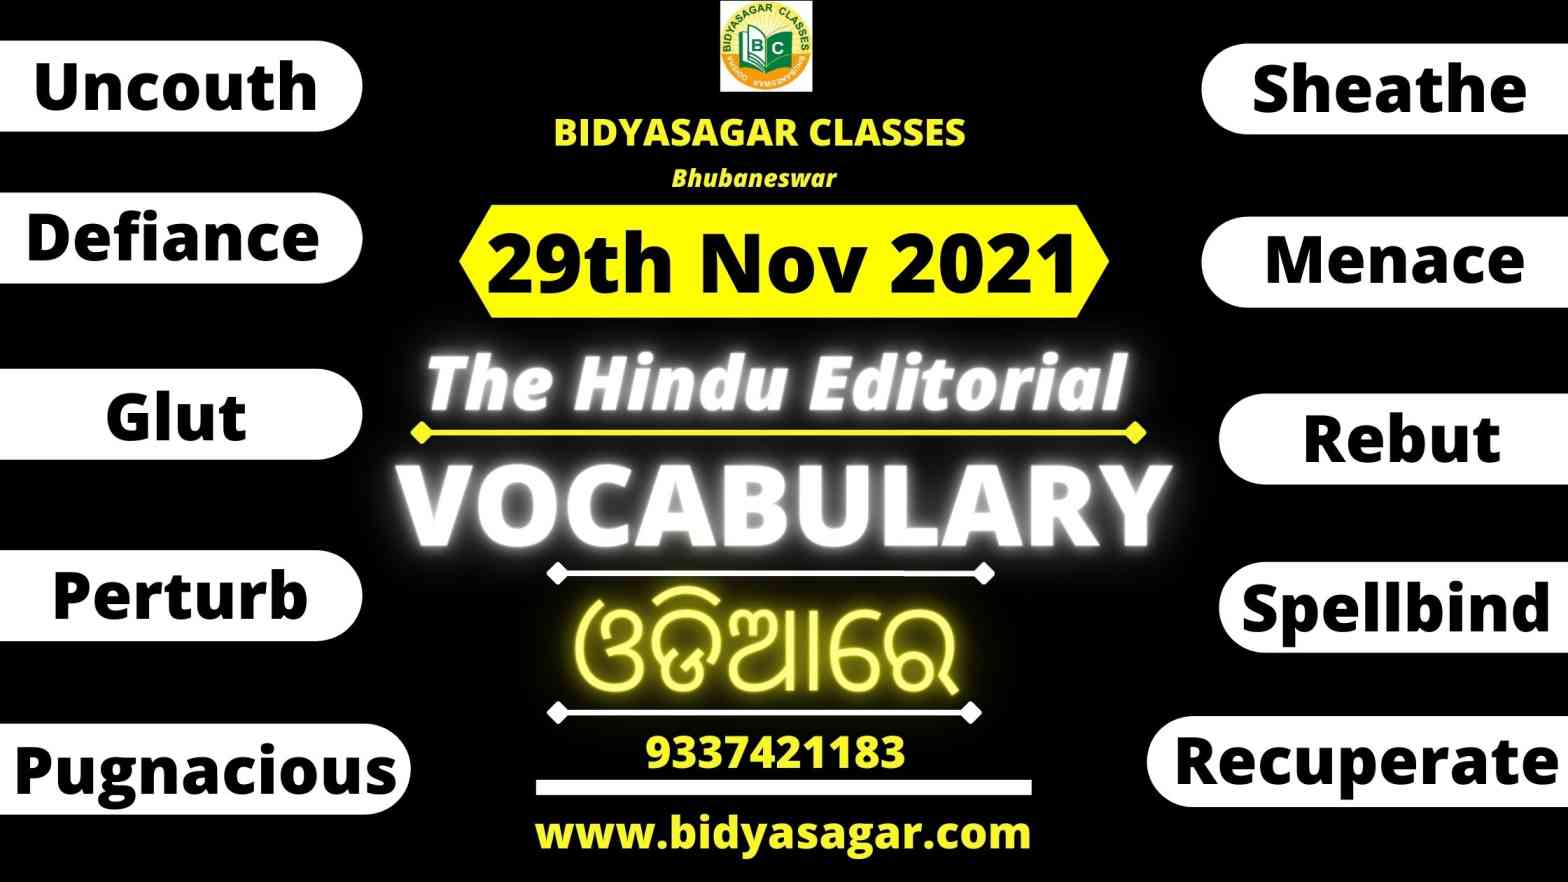 The Hindu Editorial Vocabulary of 29th November 2021